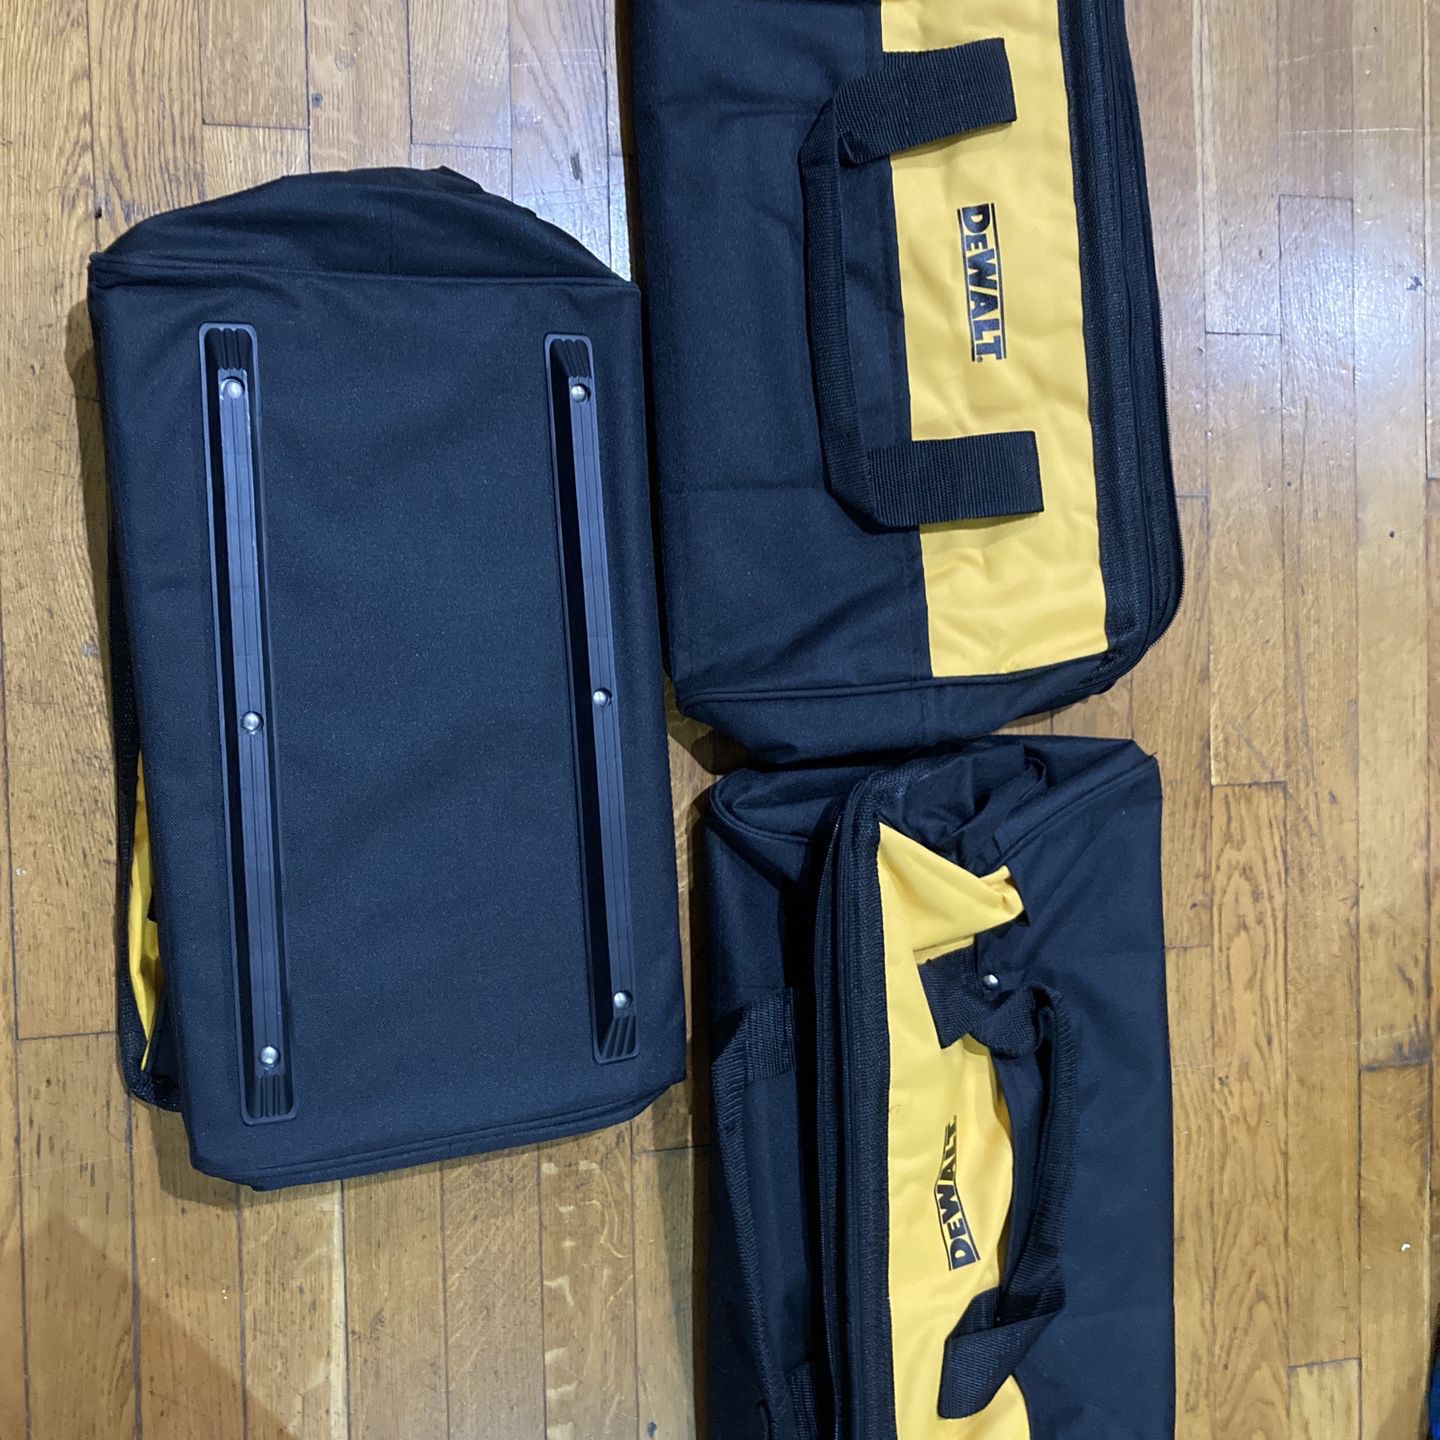 Tool Bag 19” DeWalt Brand New! Power Tools Bag